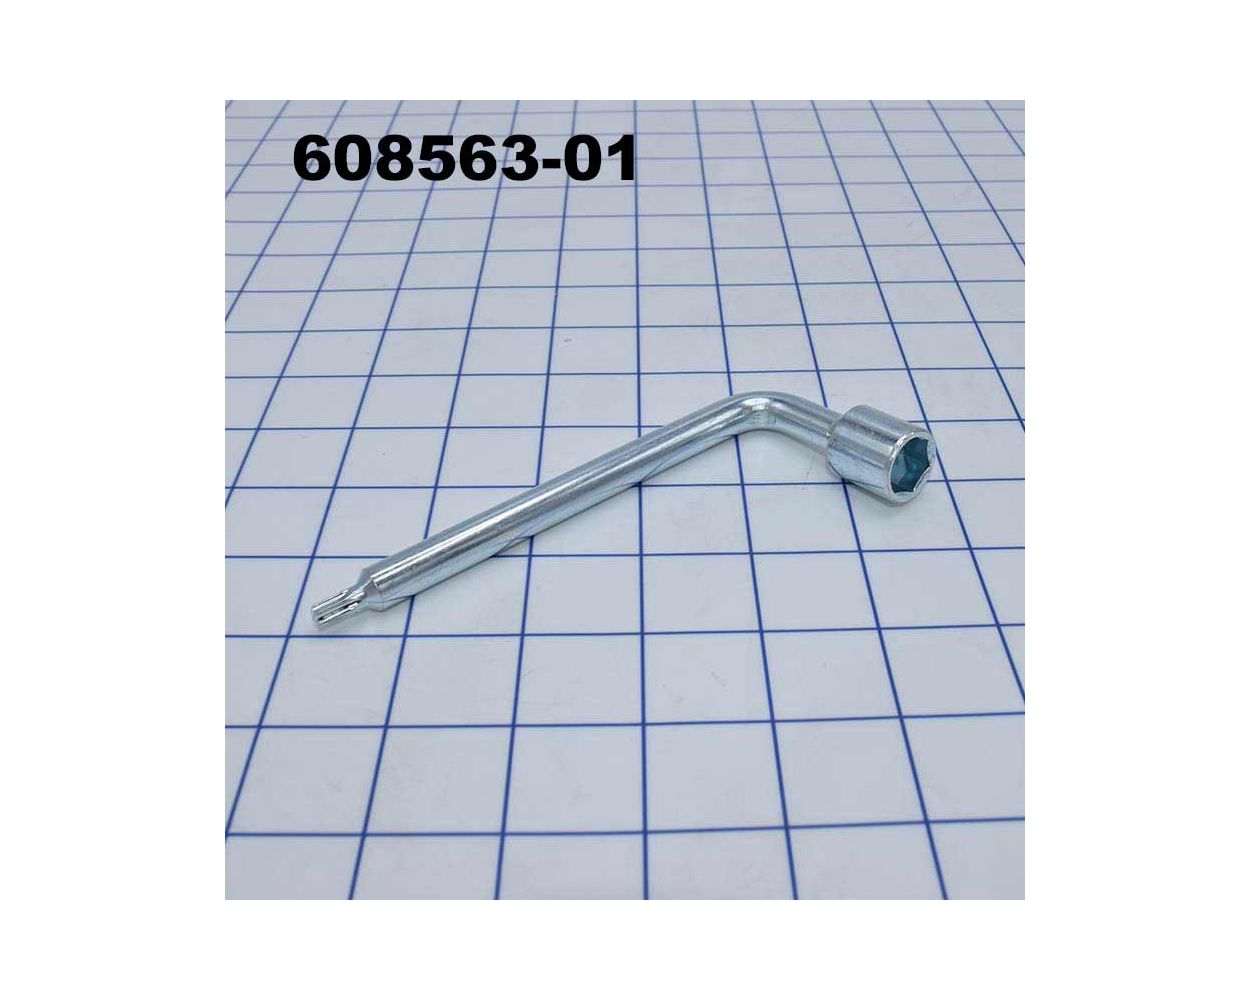 DEWALT Dw708 Crosscut Miter Saw Wrench 608563-01 for sale online 